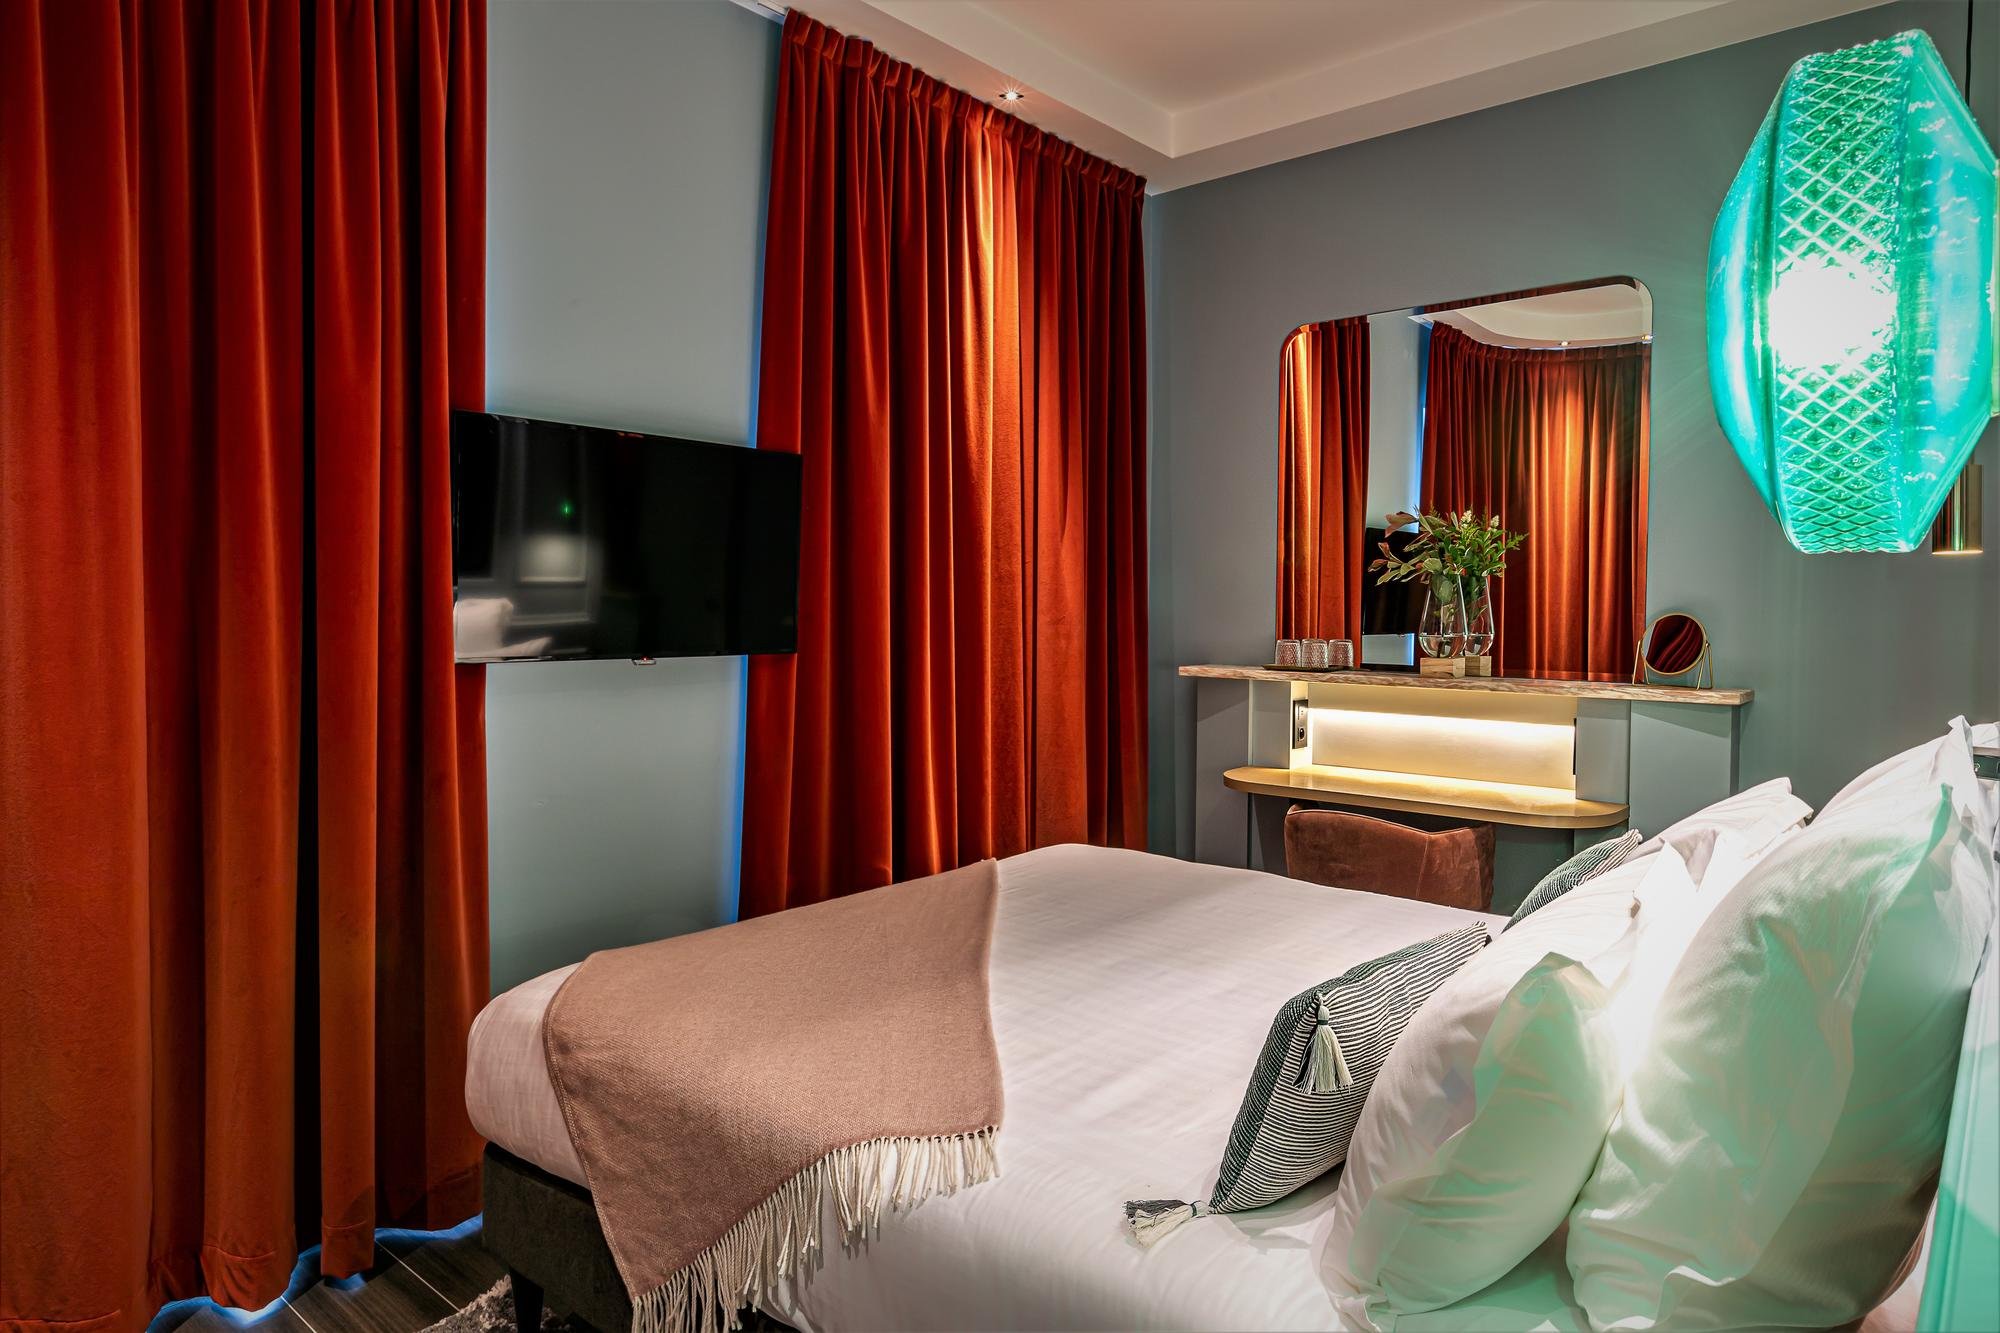 Hôtel Veryste - Verydouce Room - Bed and TV